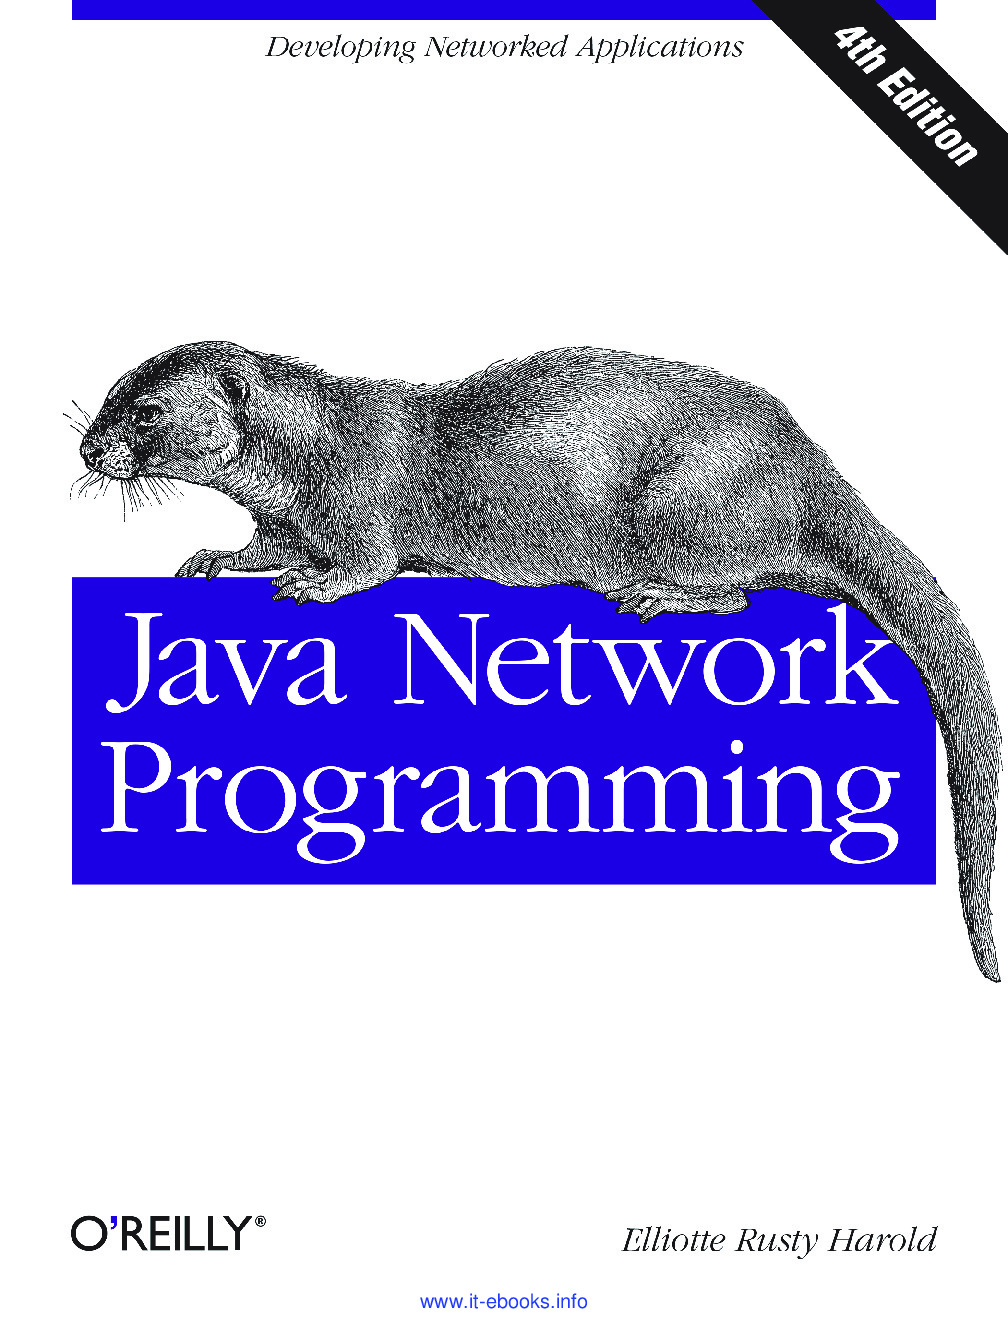 [JAVA][Java Network Programming, 4th Edition]